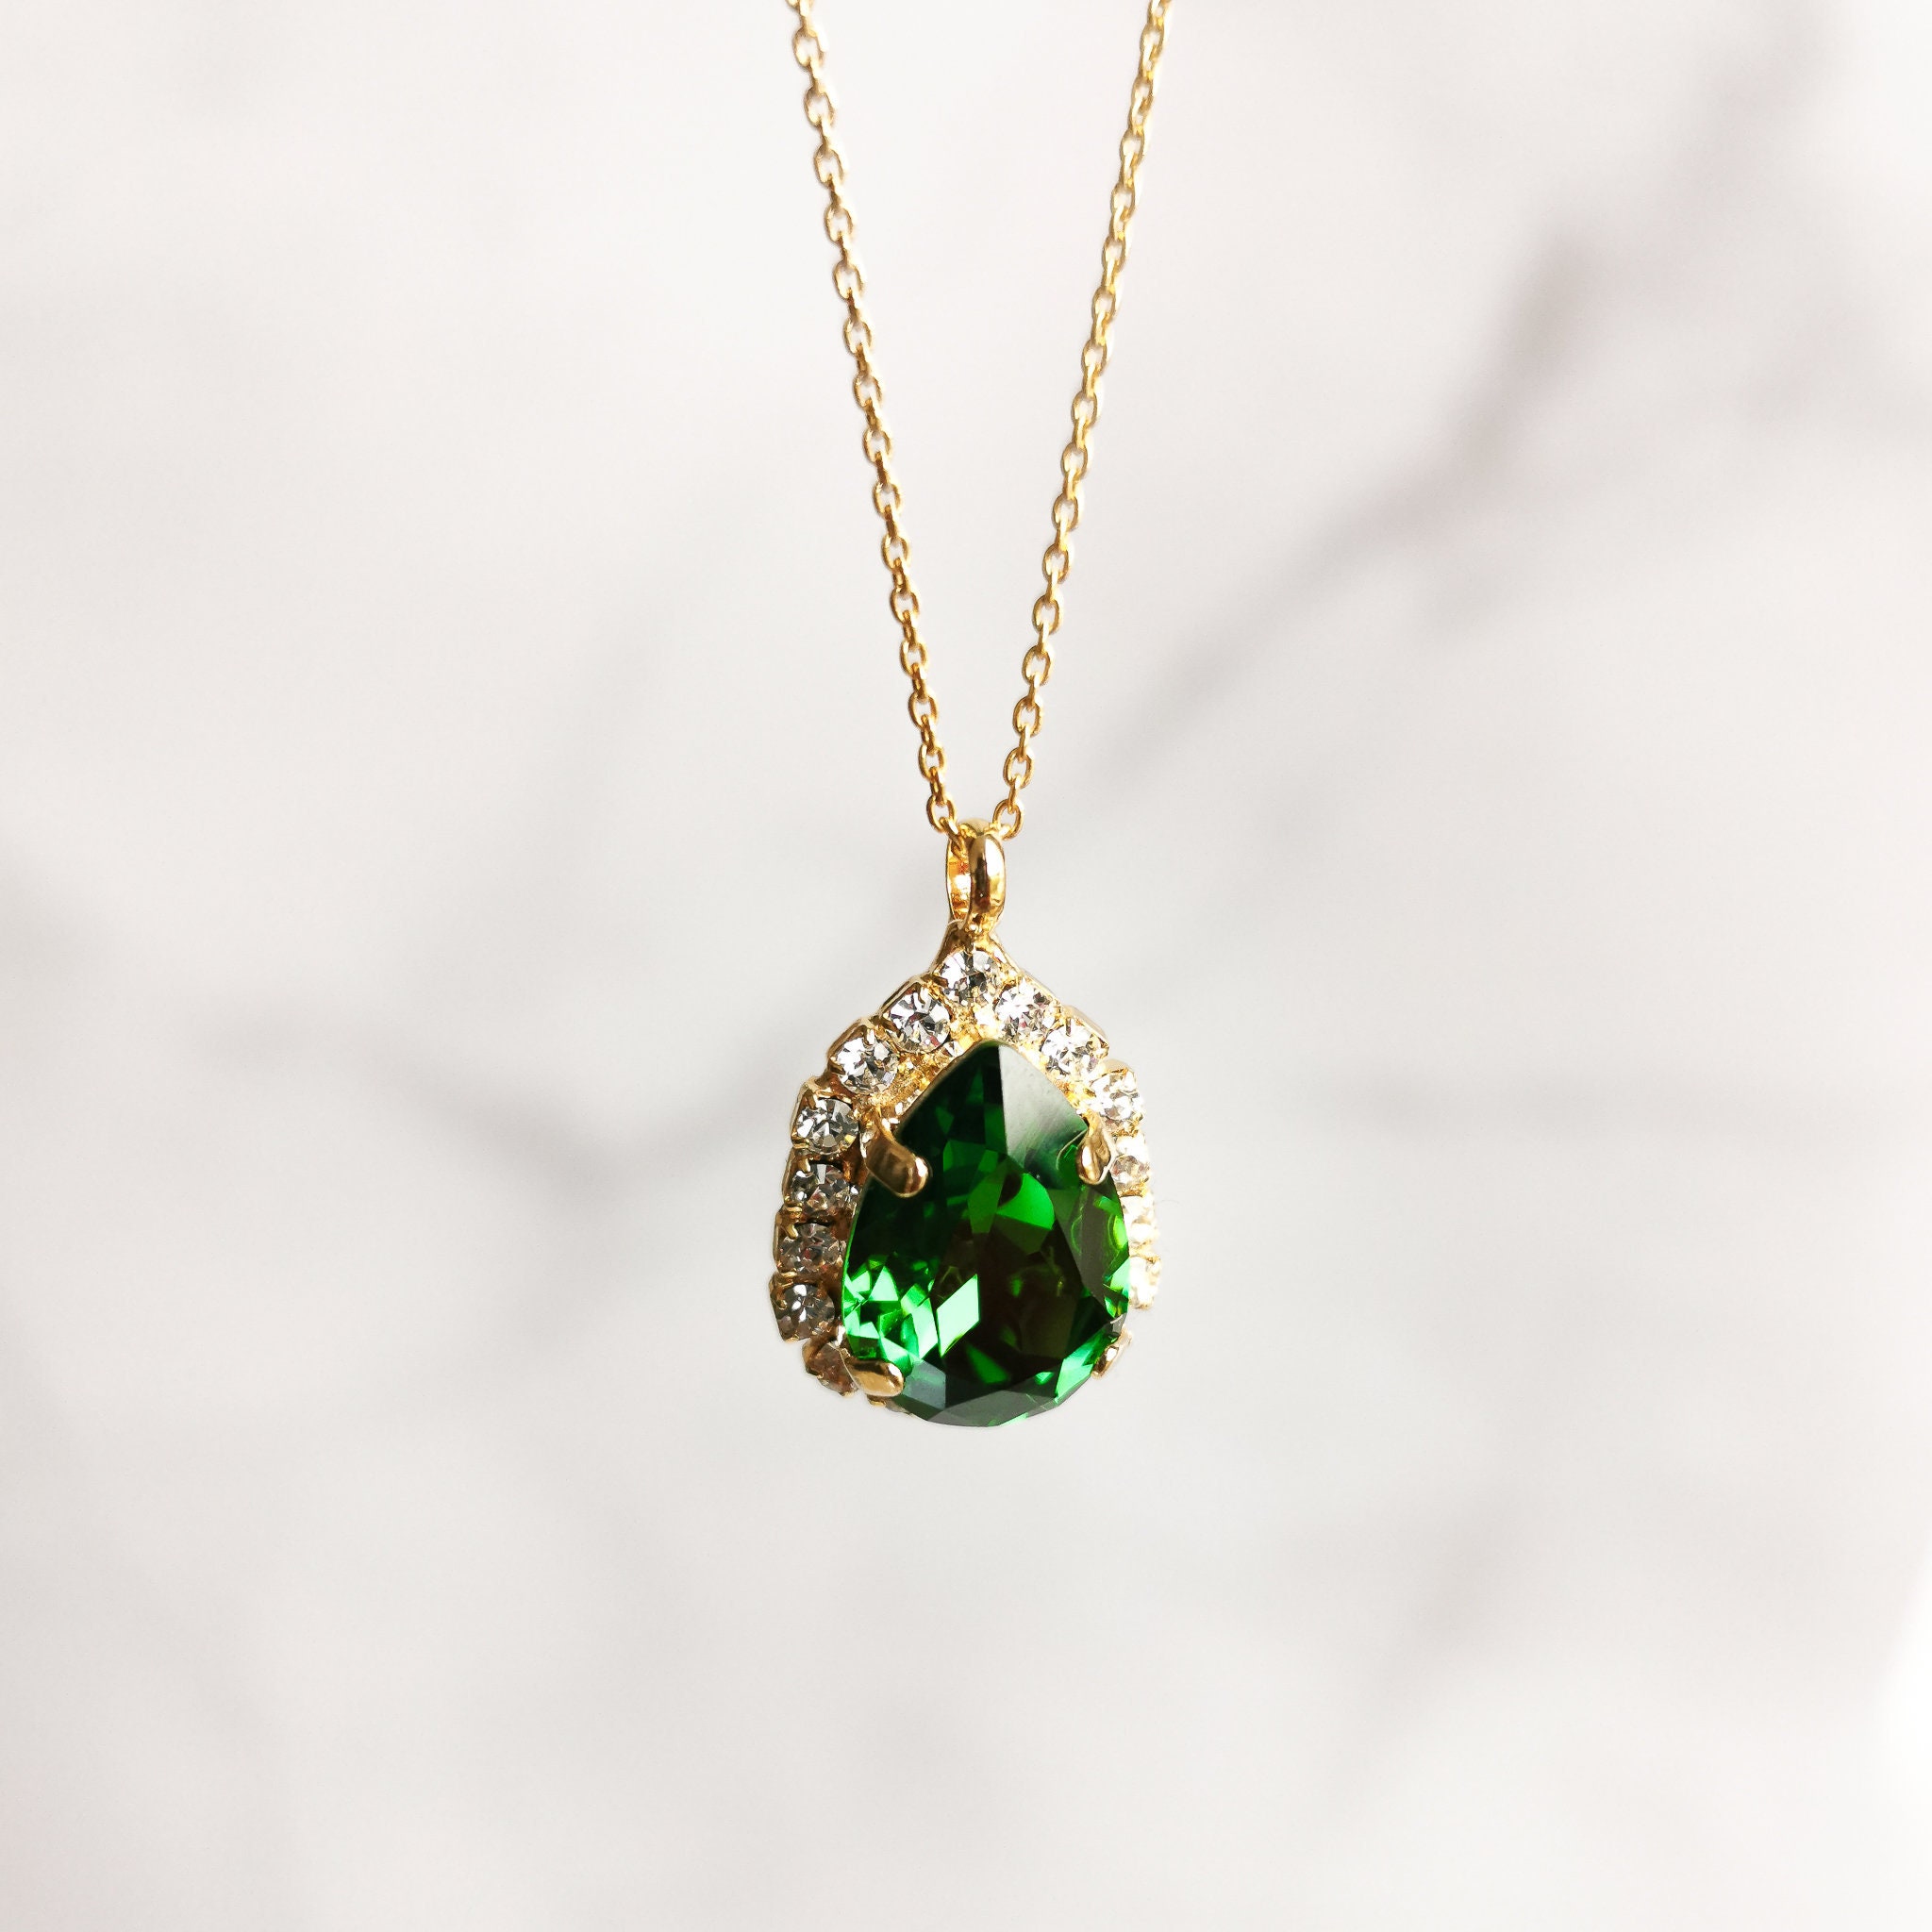 14k Gold Filled Necklace/ Swarovski Crystal Necklace/ Emerald | Etsy